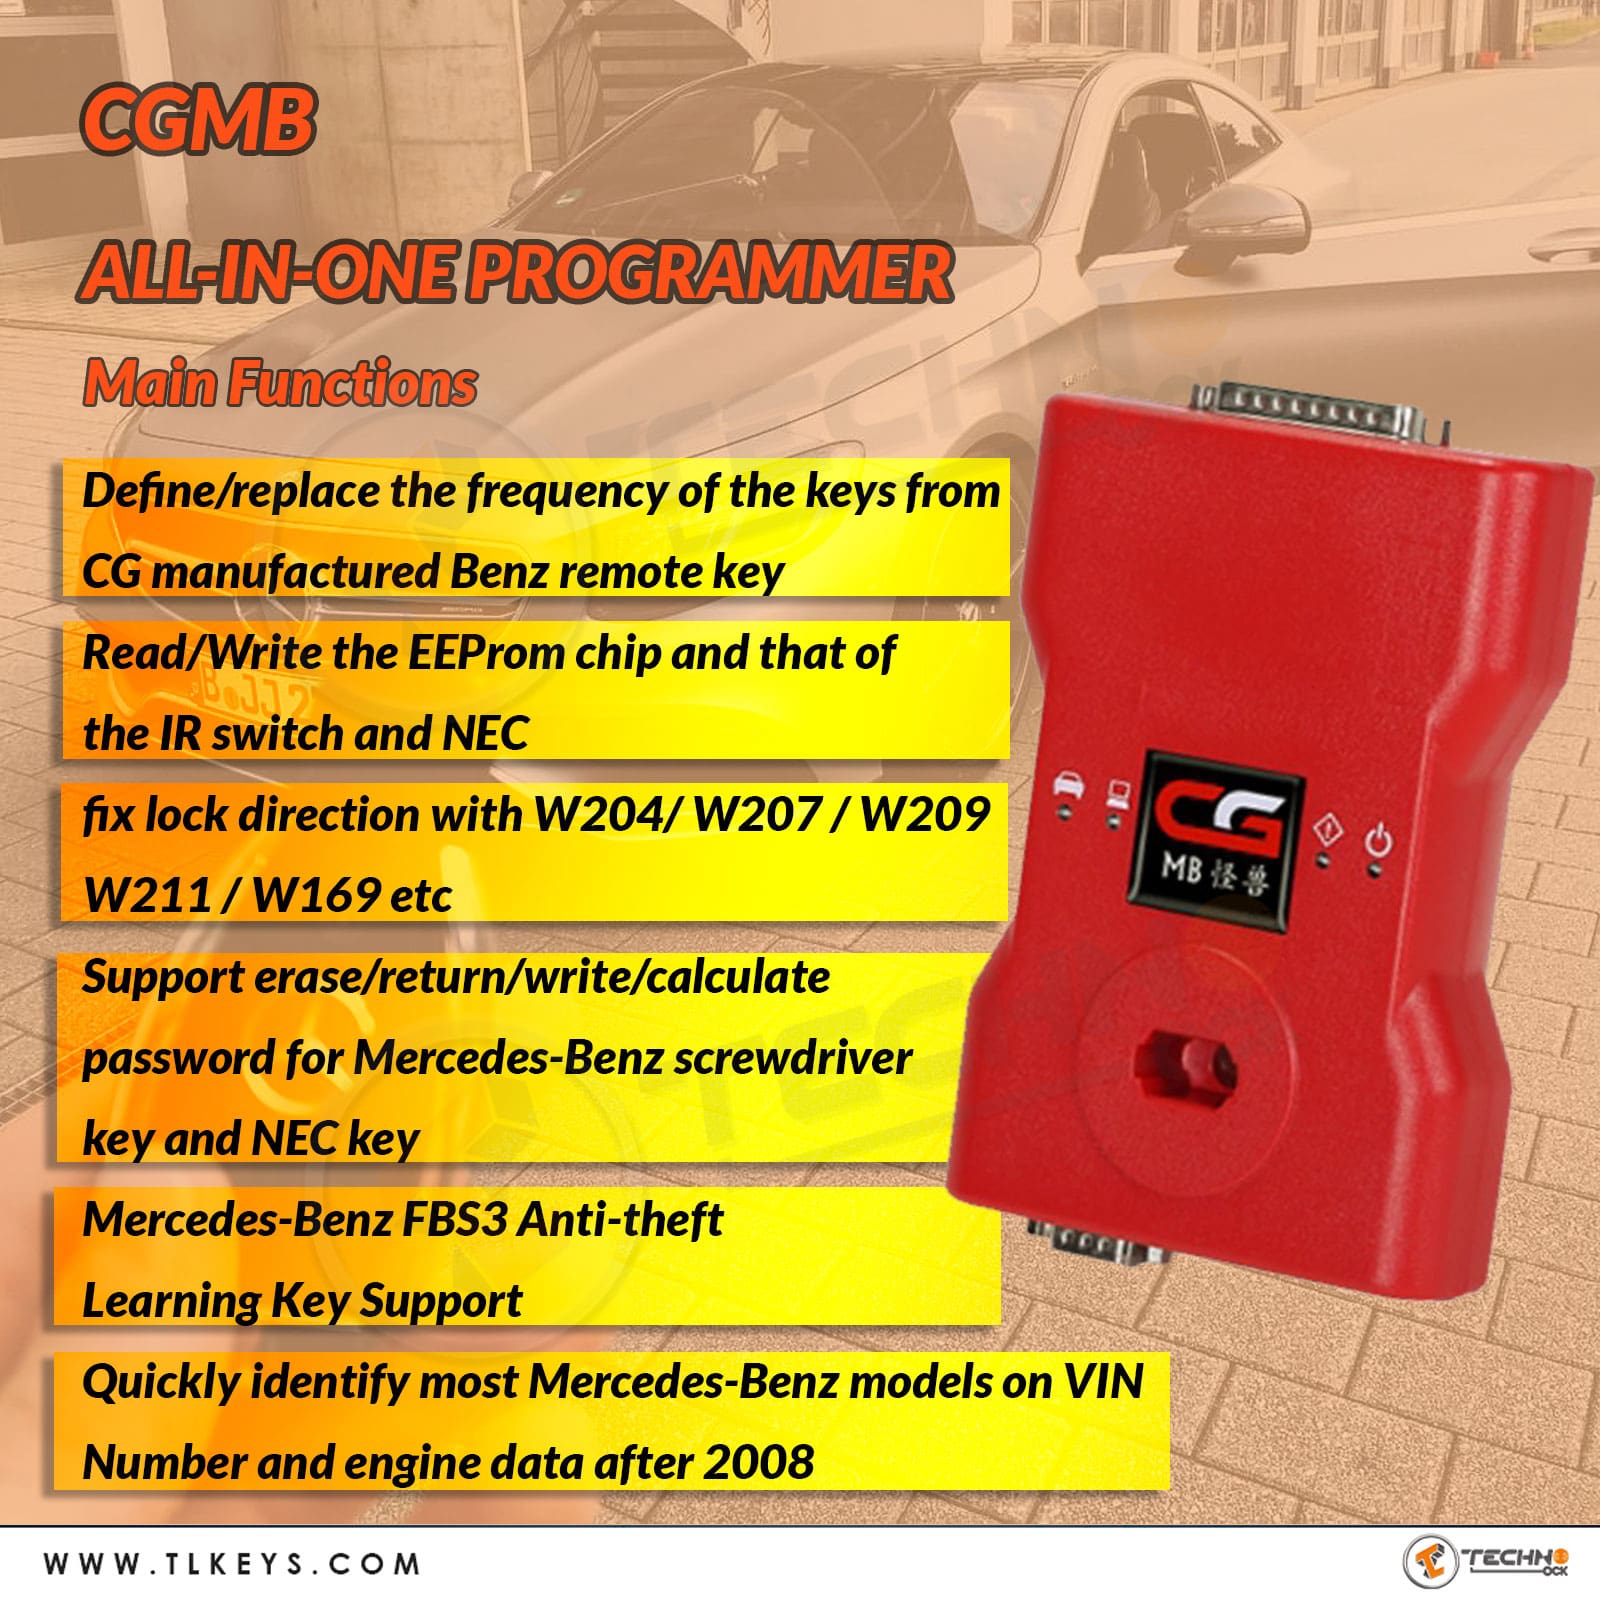 Reasons to Get CGDI MB Key Programmer